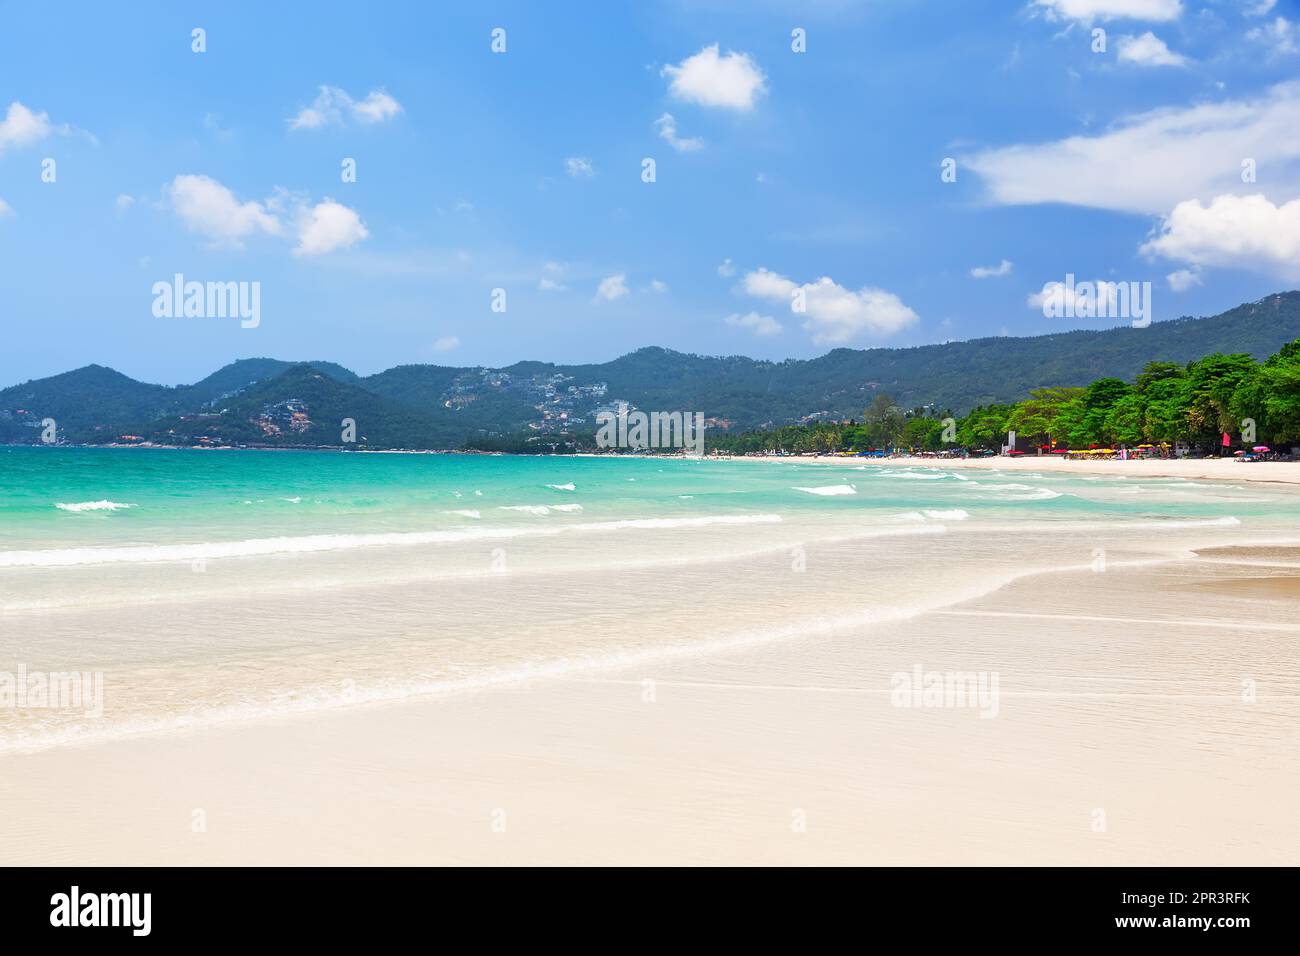 View of beautiful white sand beach with turquoise water of Chaweng beach, in Koh Samui (Samui Island), Thailand. Amazing beach scene vacation and summ Stock Photo